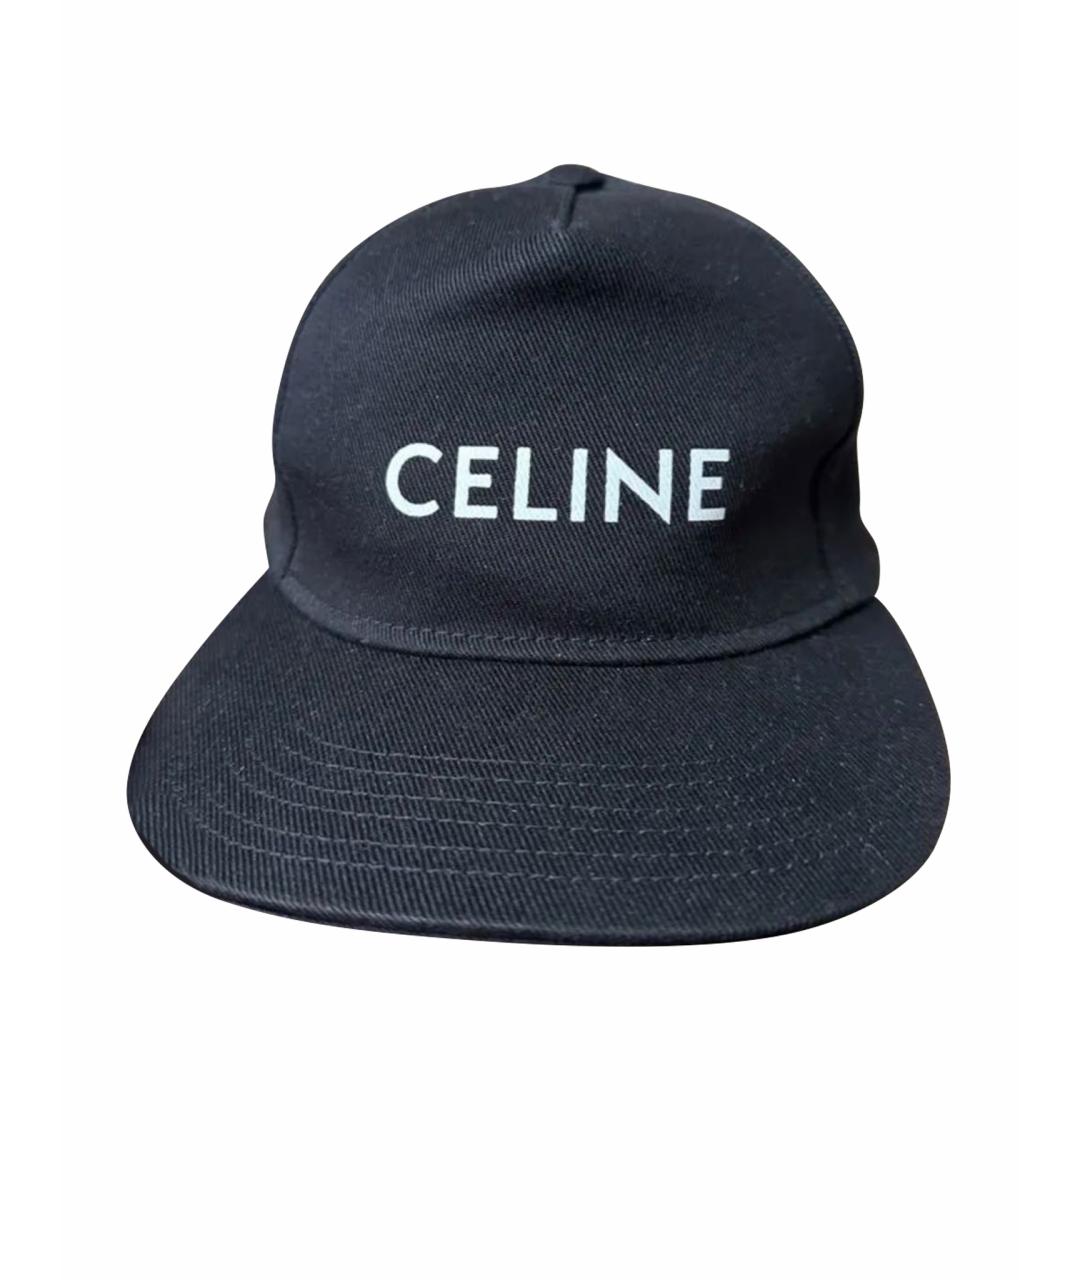 CELINE PRE-OWNED Черная хлопковая кепка/бейсболка, фото 1